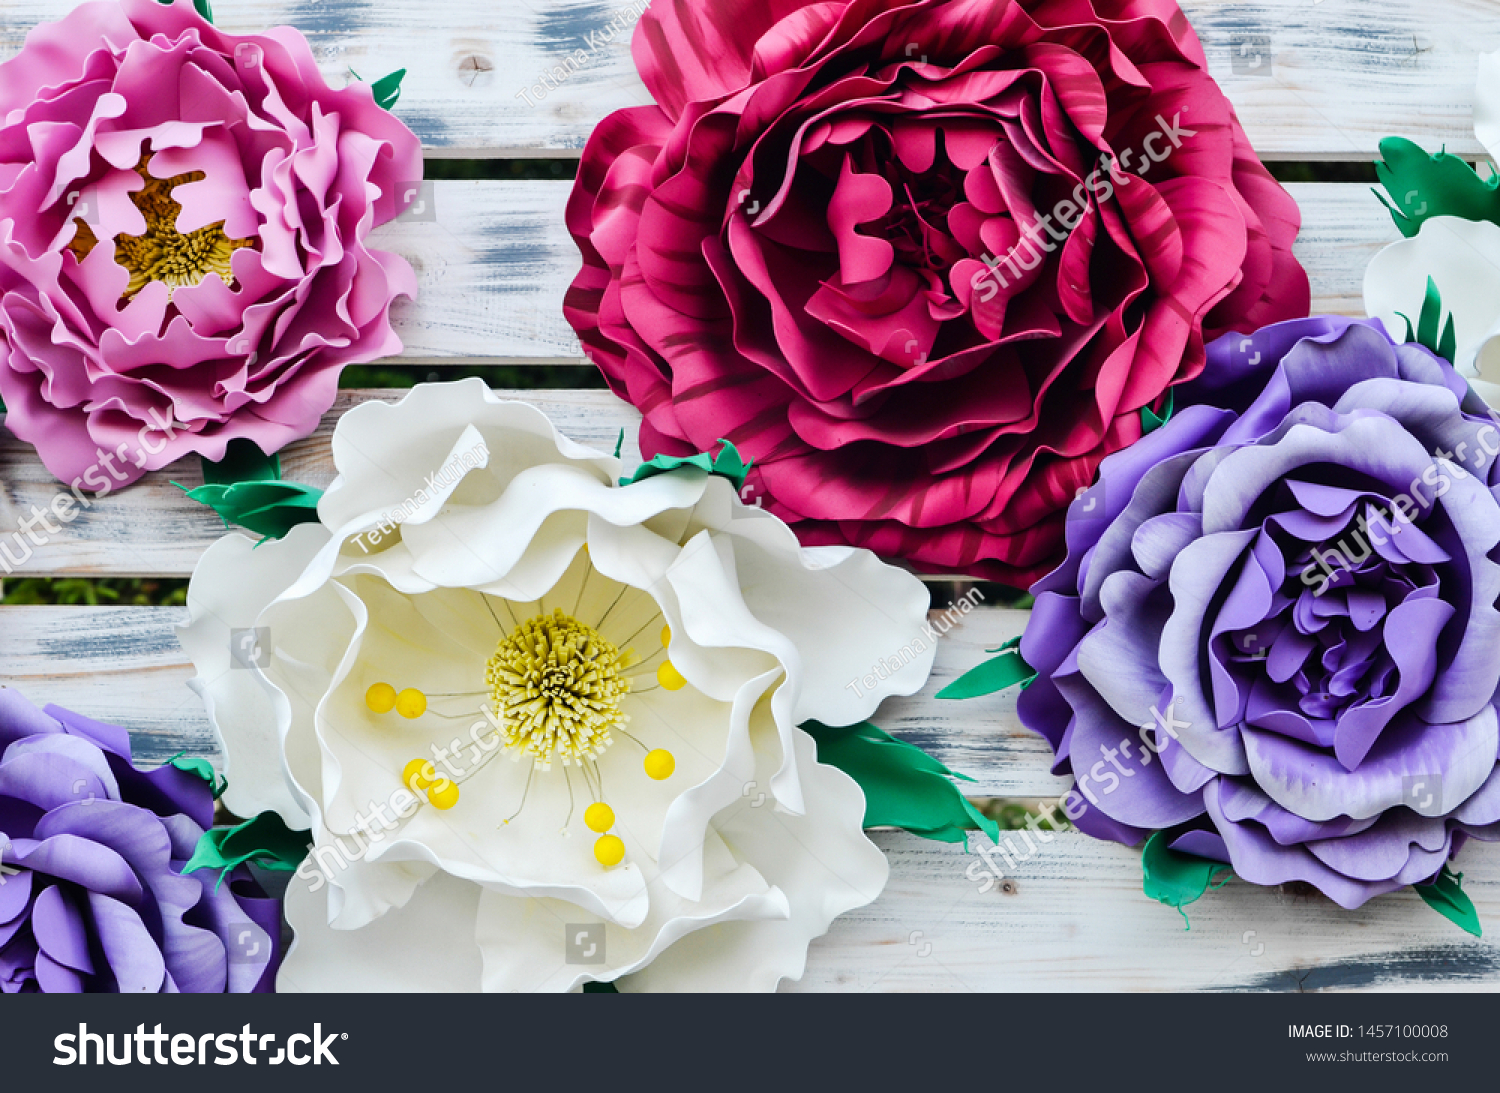 wooden craft flowers